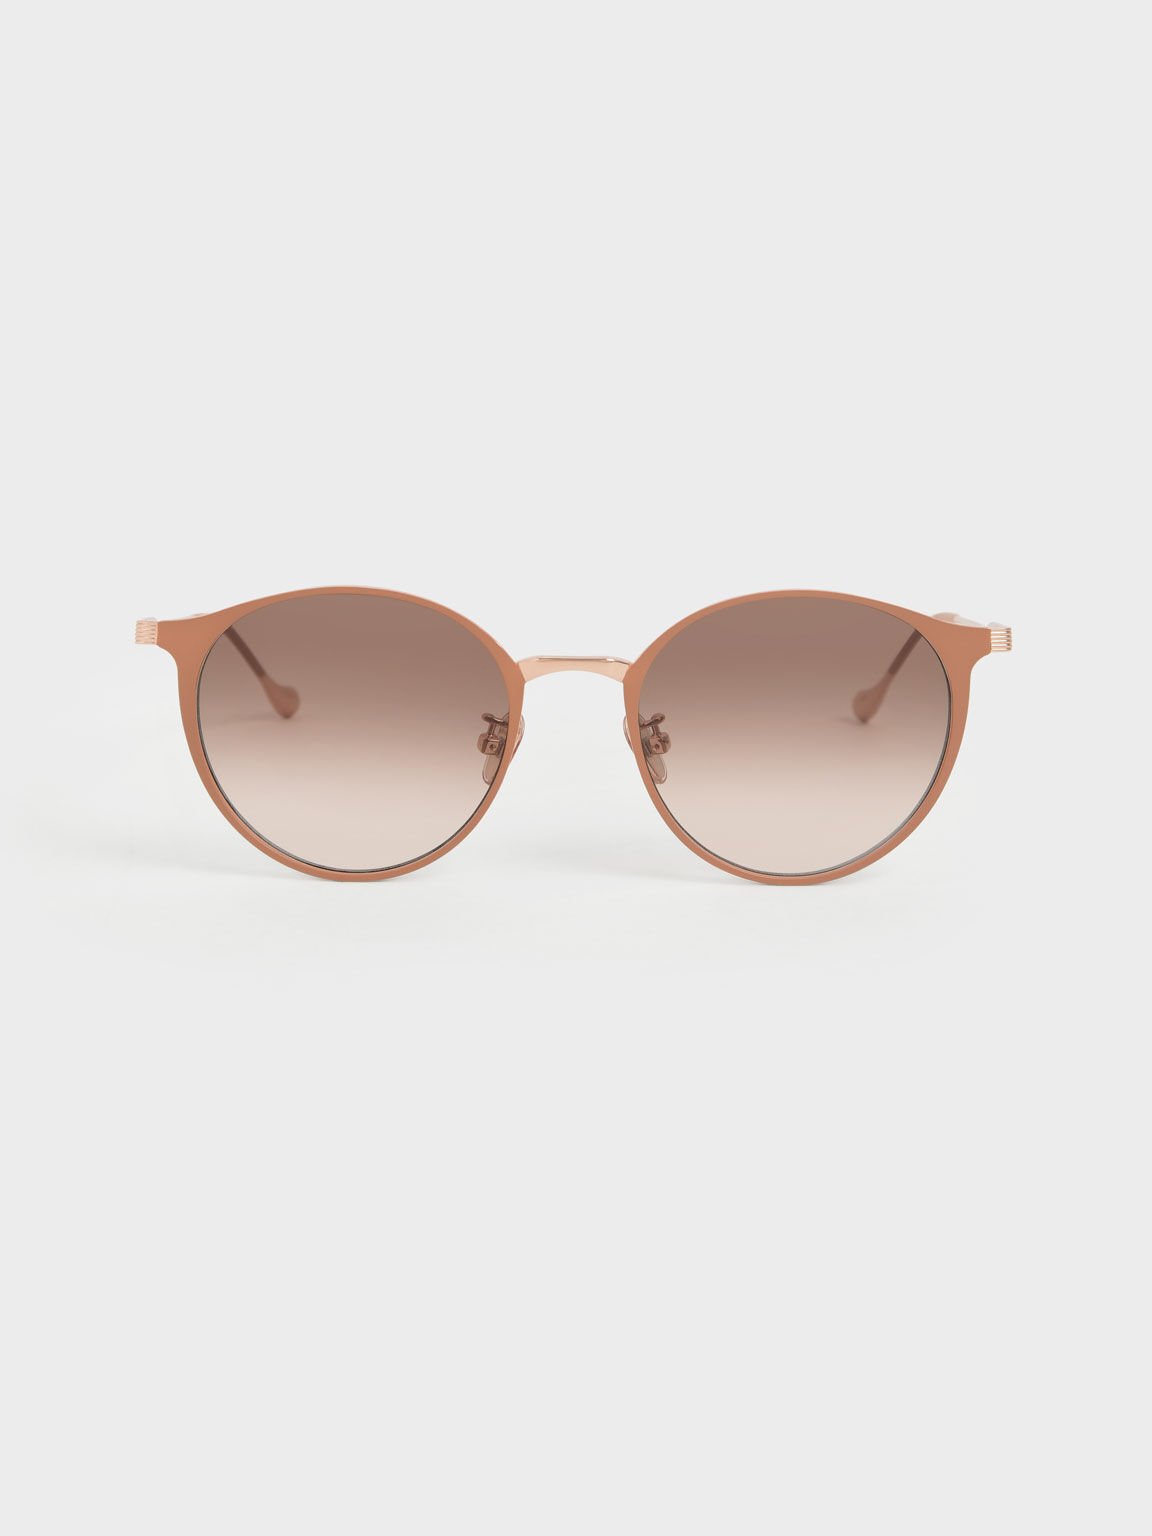 Tinted Round Sunglasses, Pink, hi-res